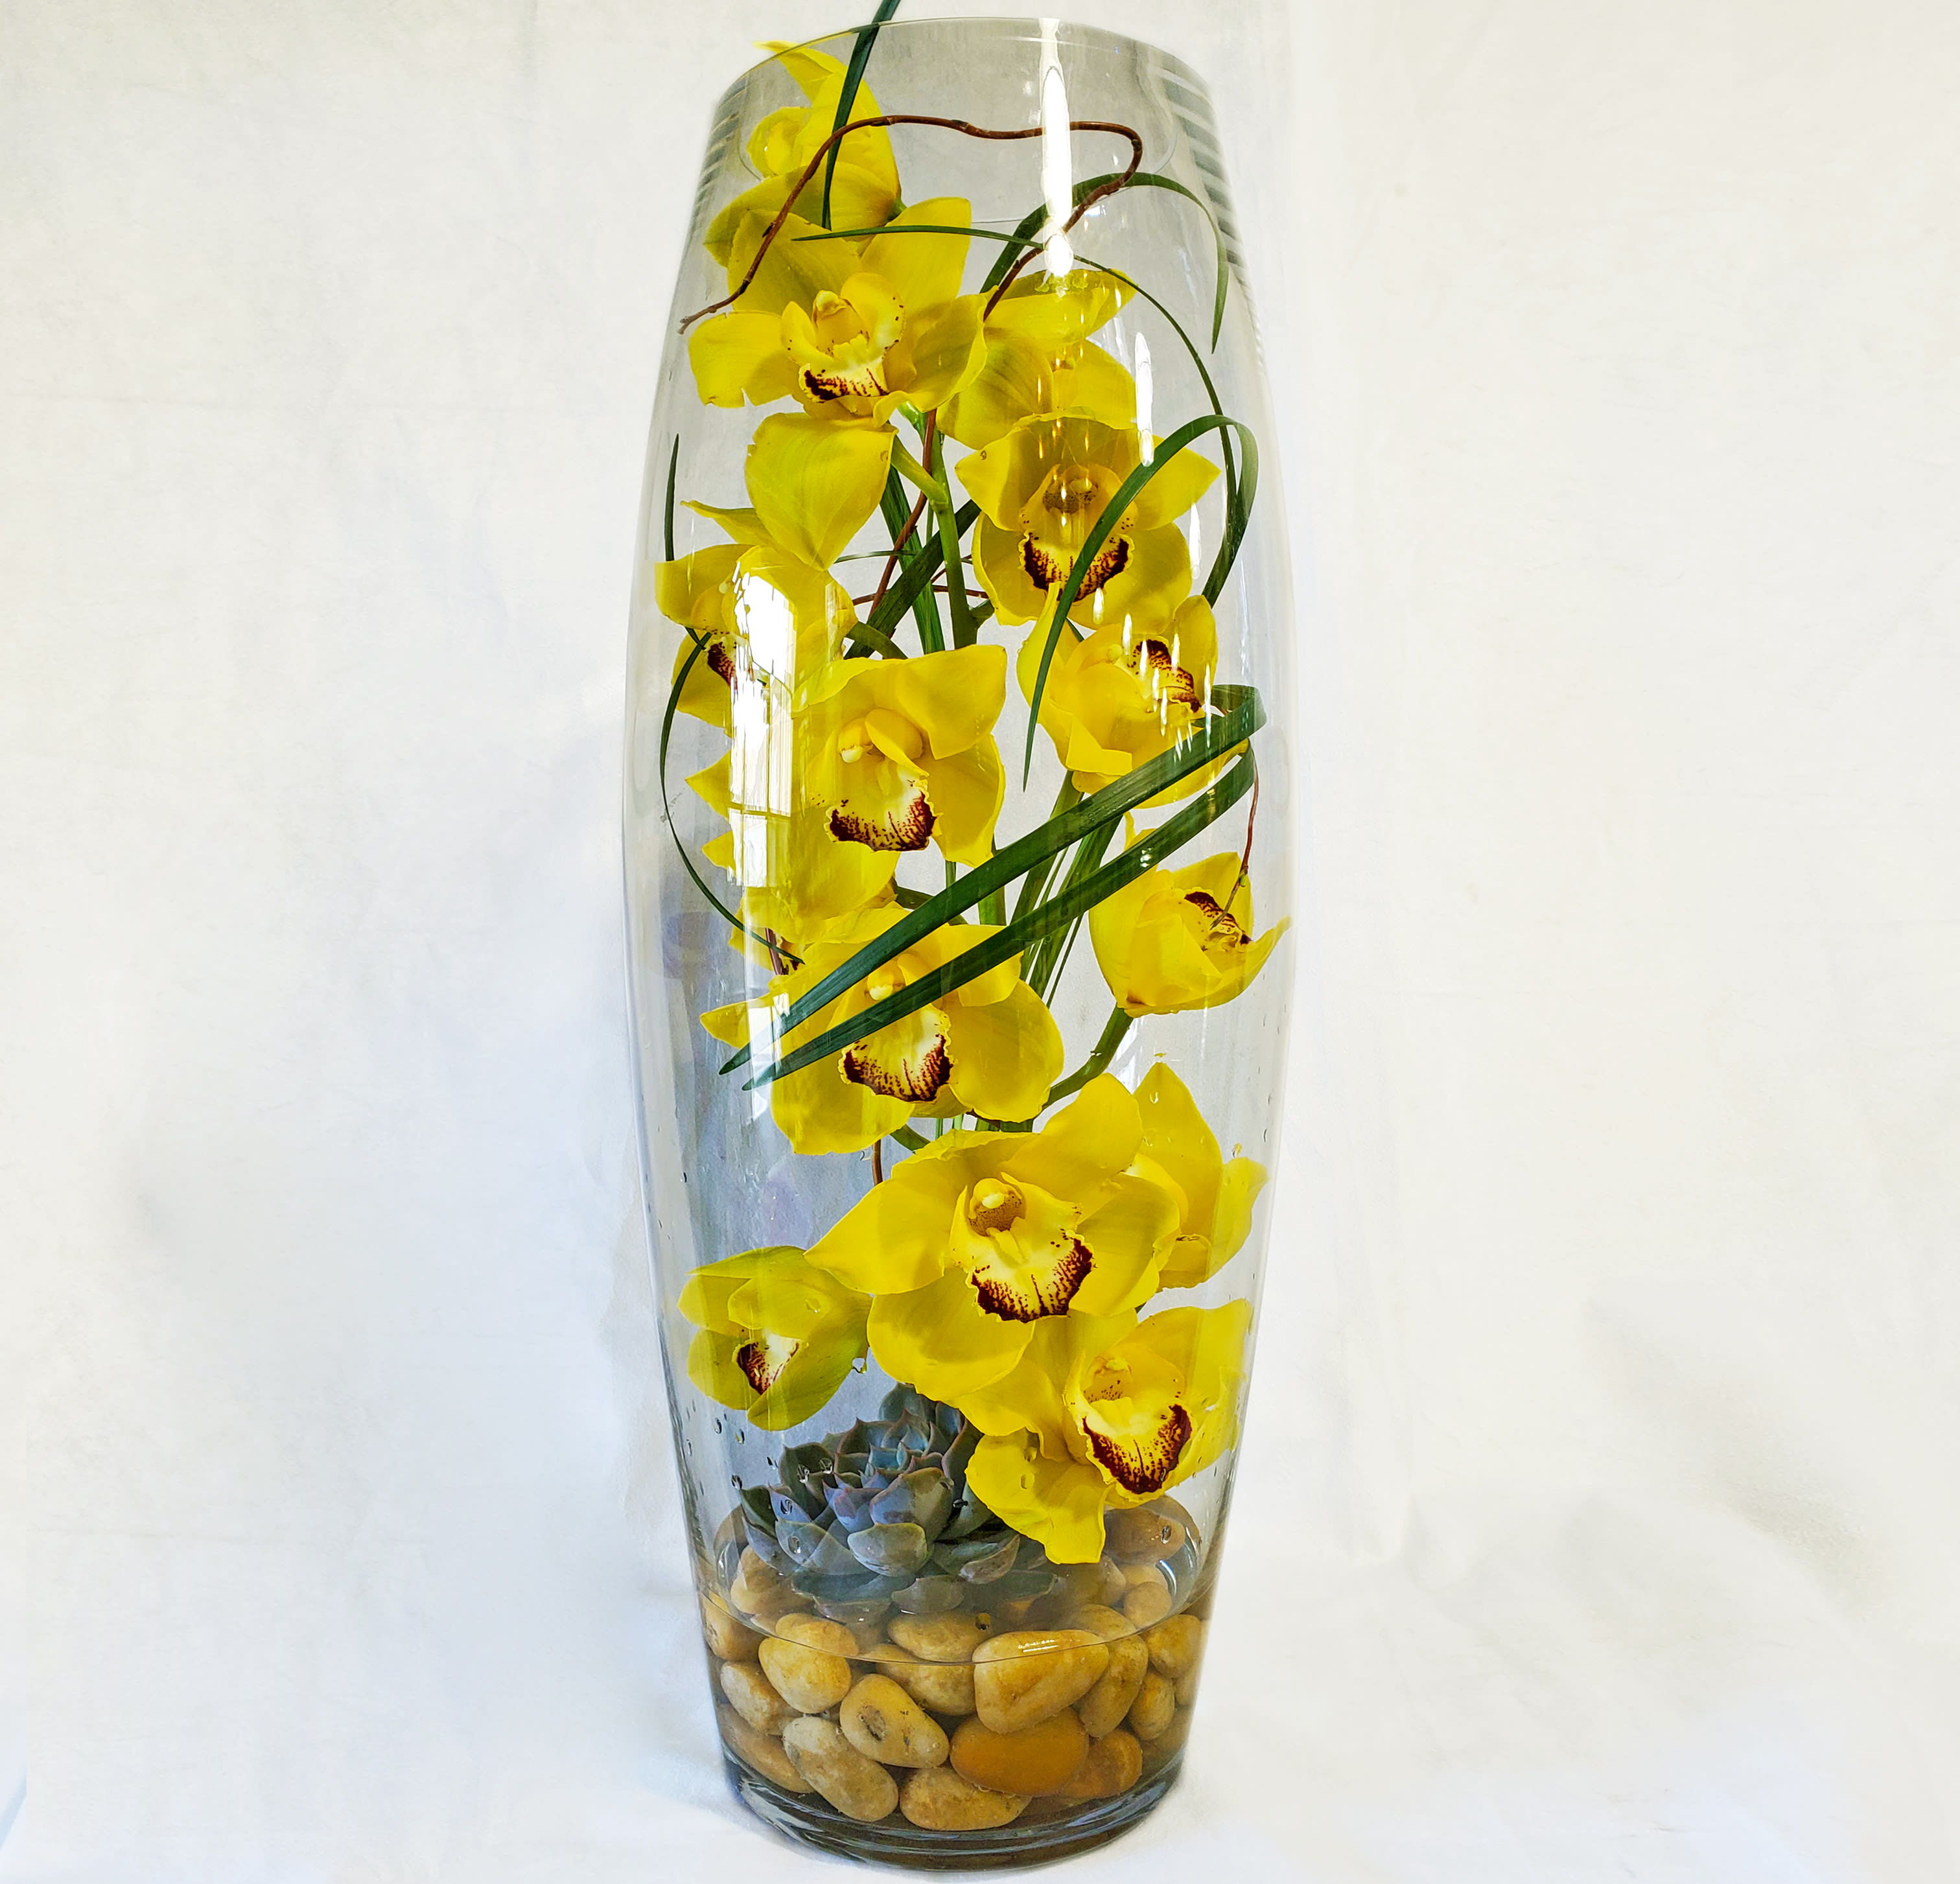 Cymbidium Orchid In A Glass Vase By Fellan Florist